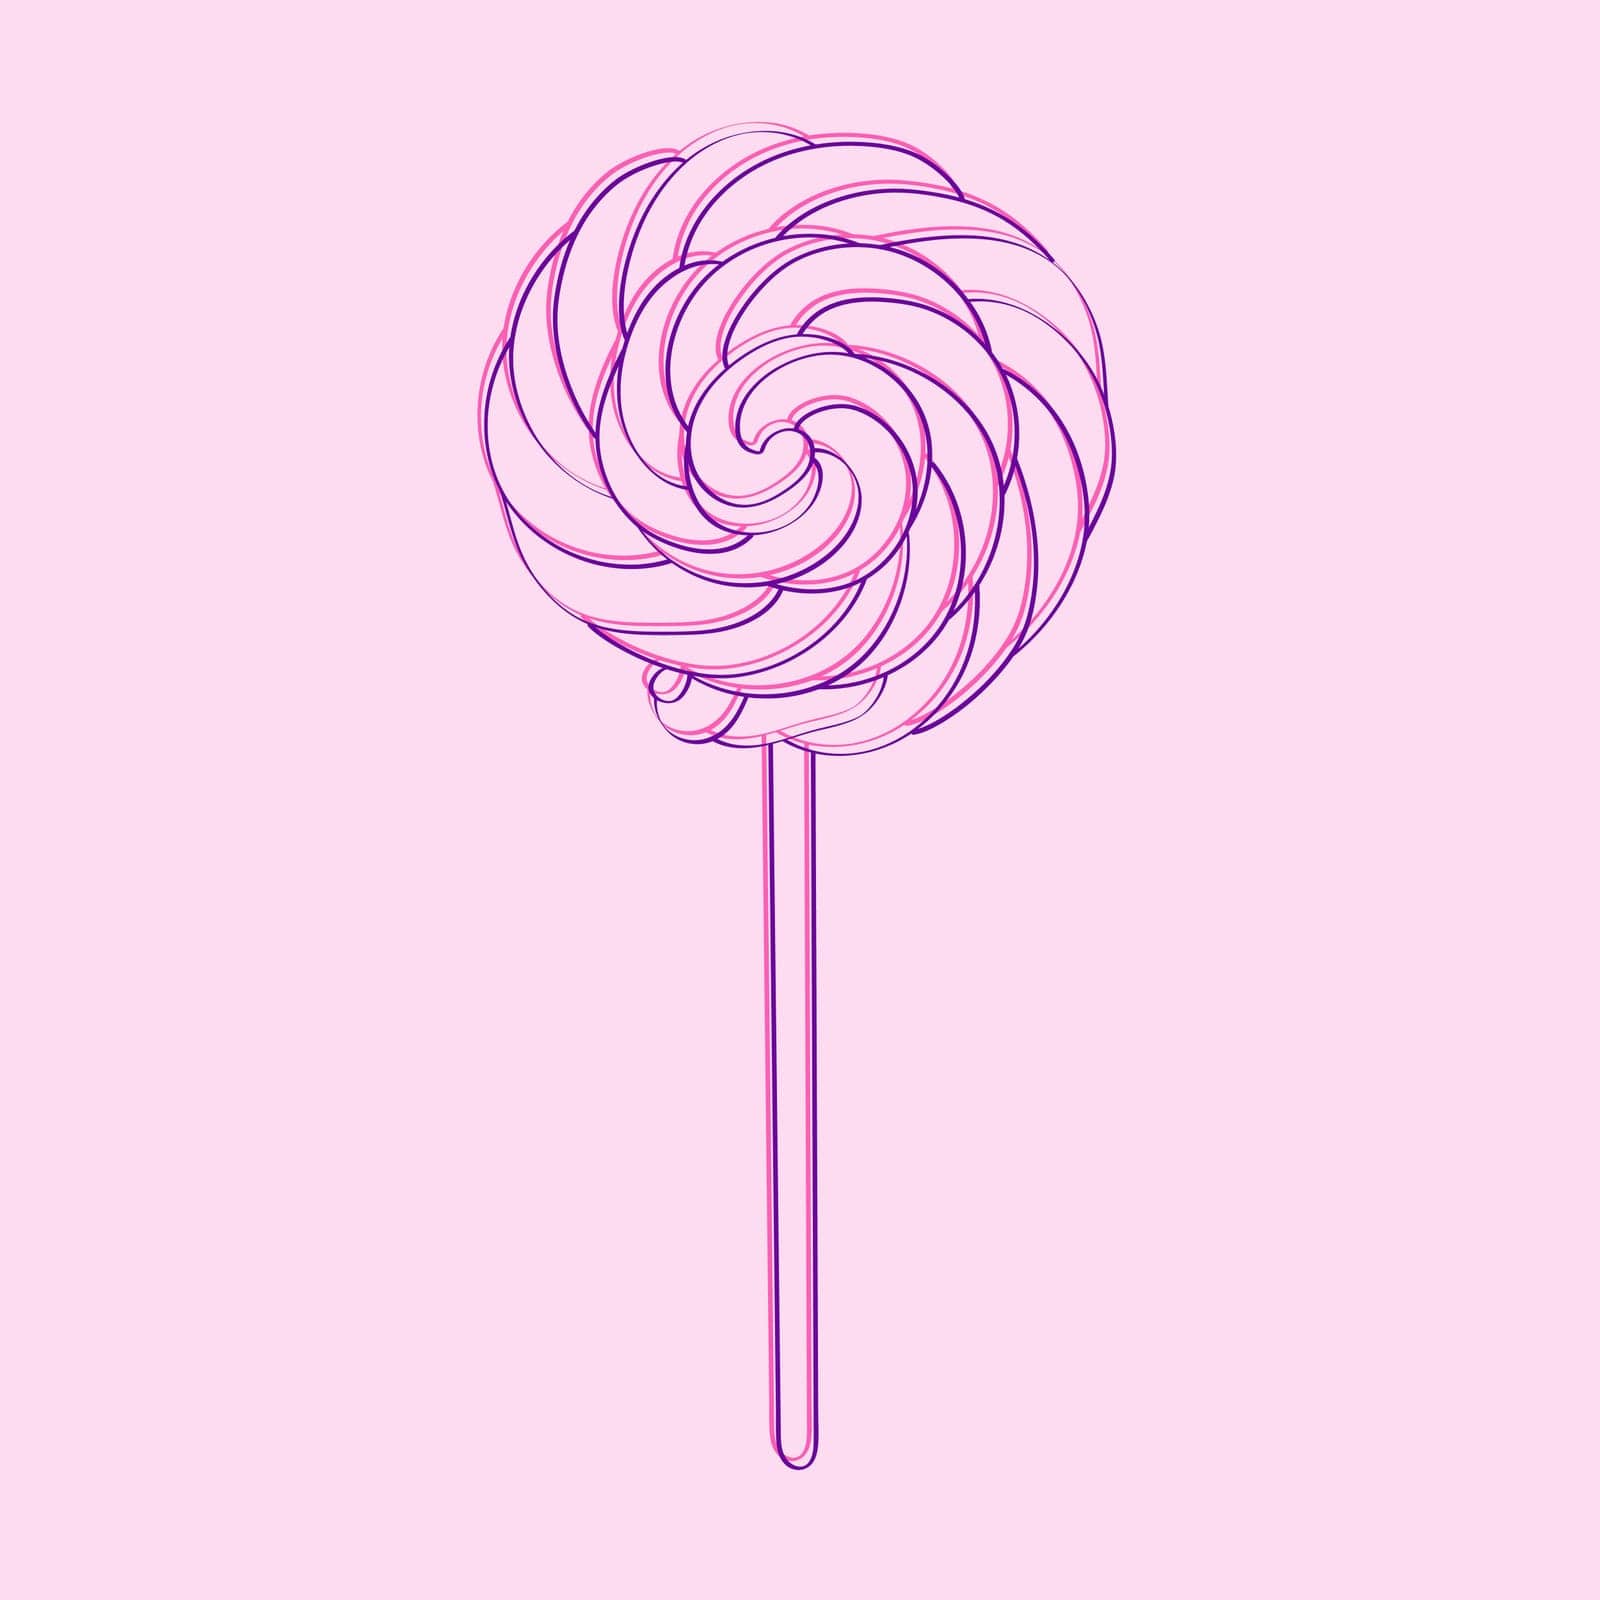 Pink lollipop on pink background by okskukuruza